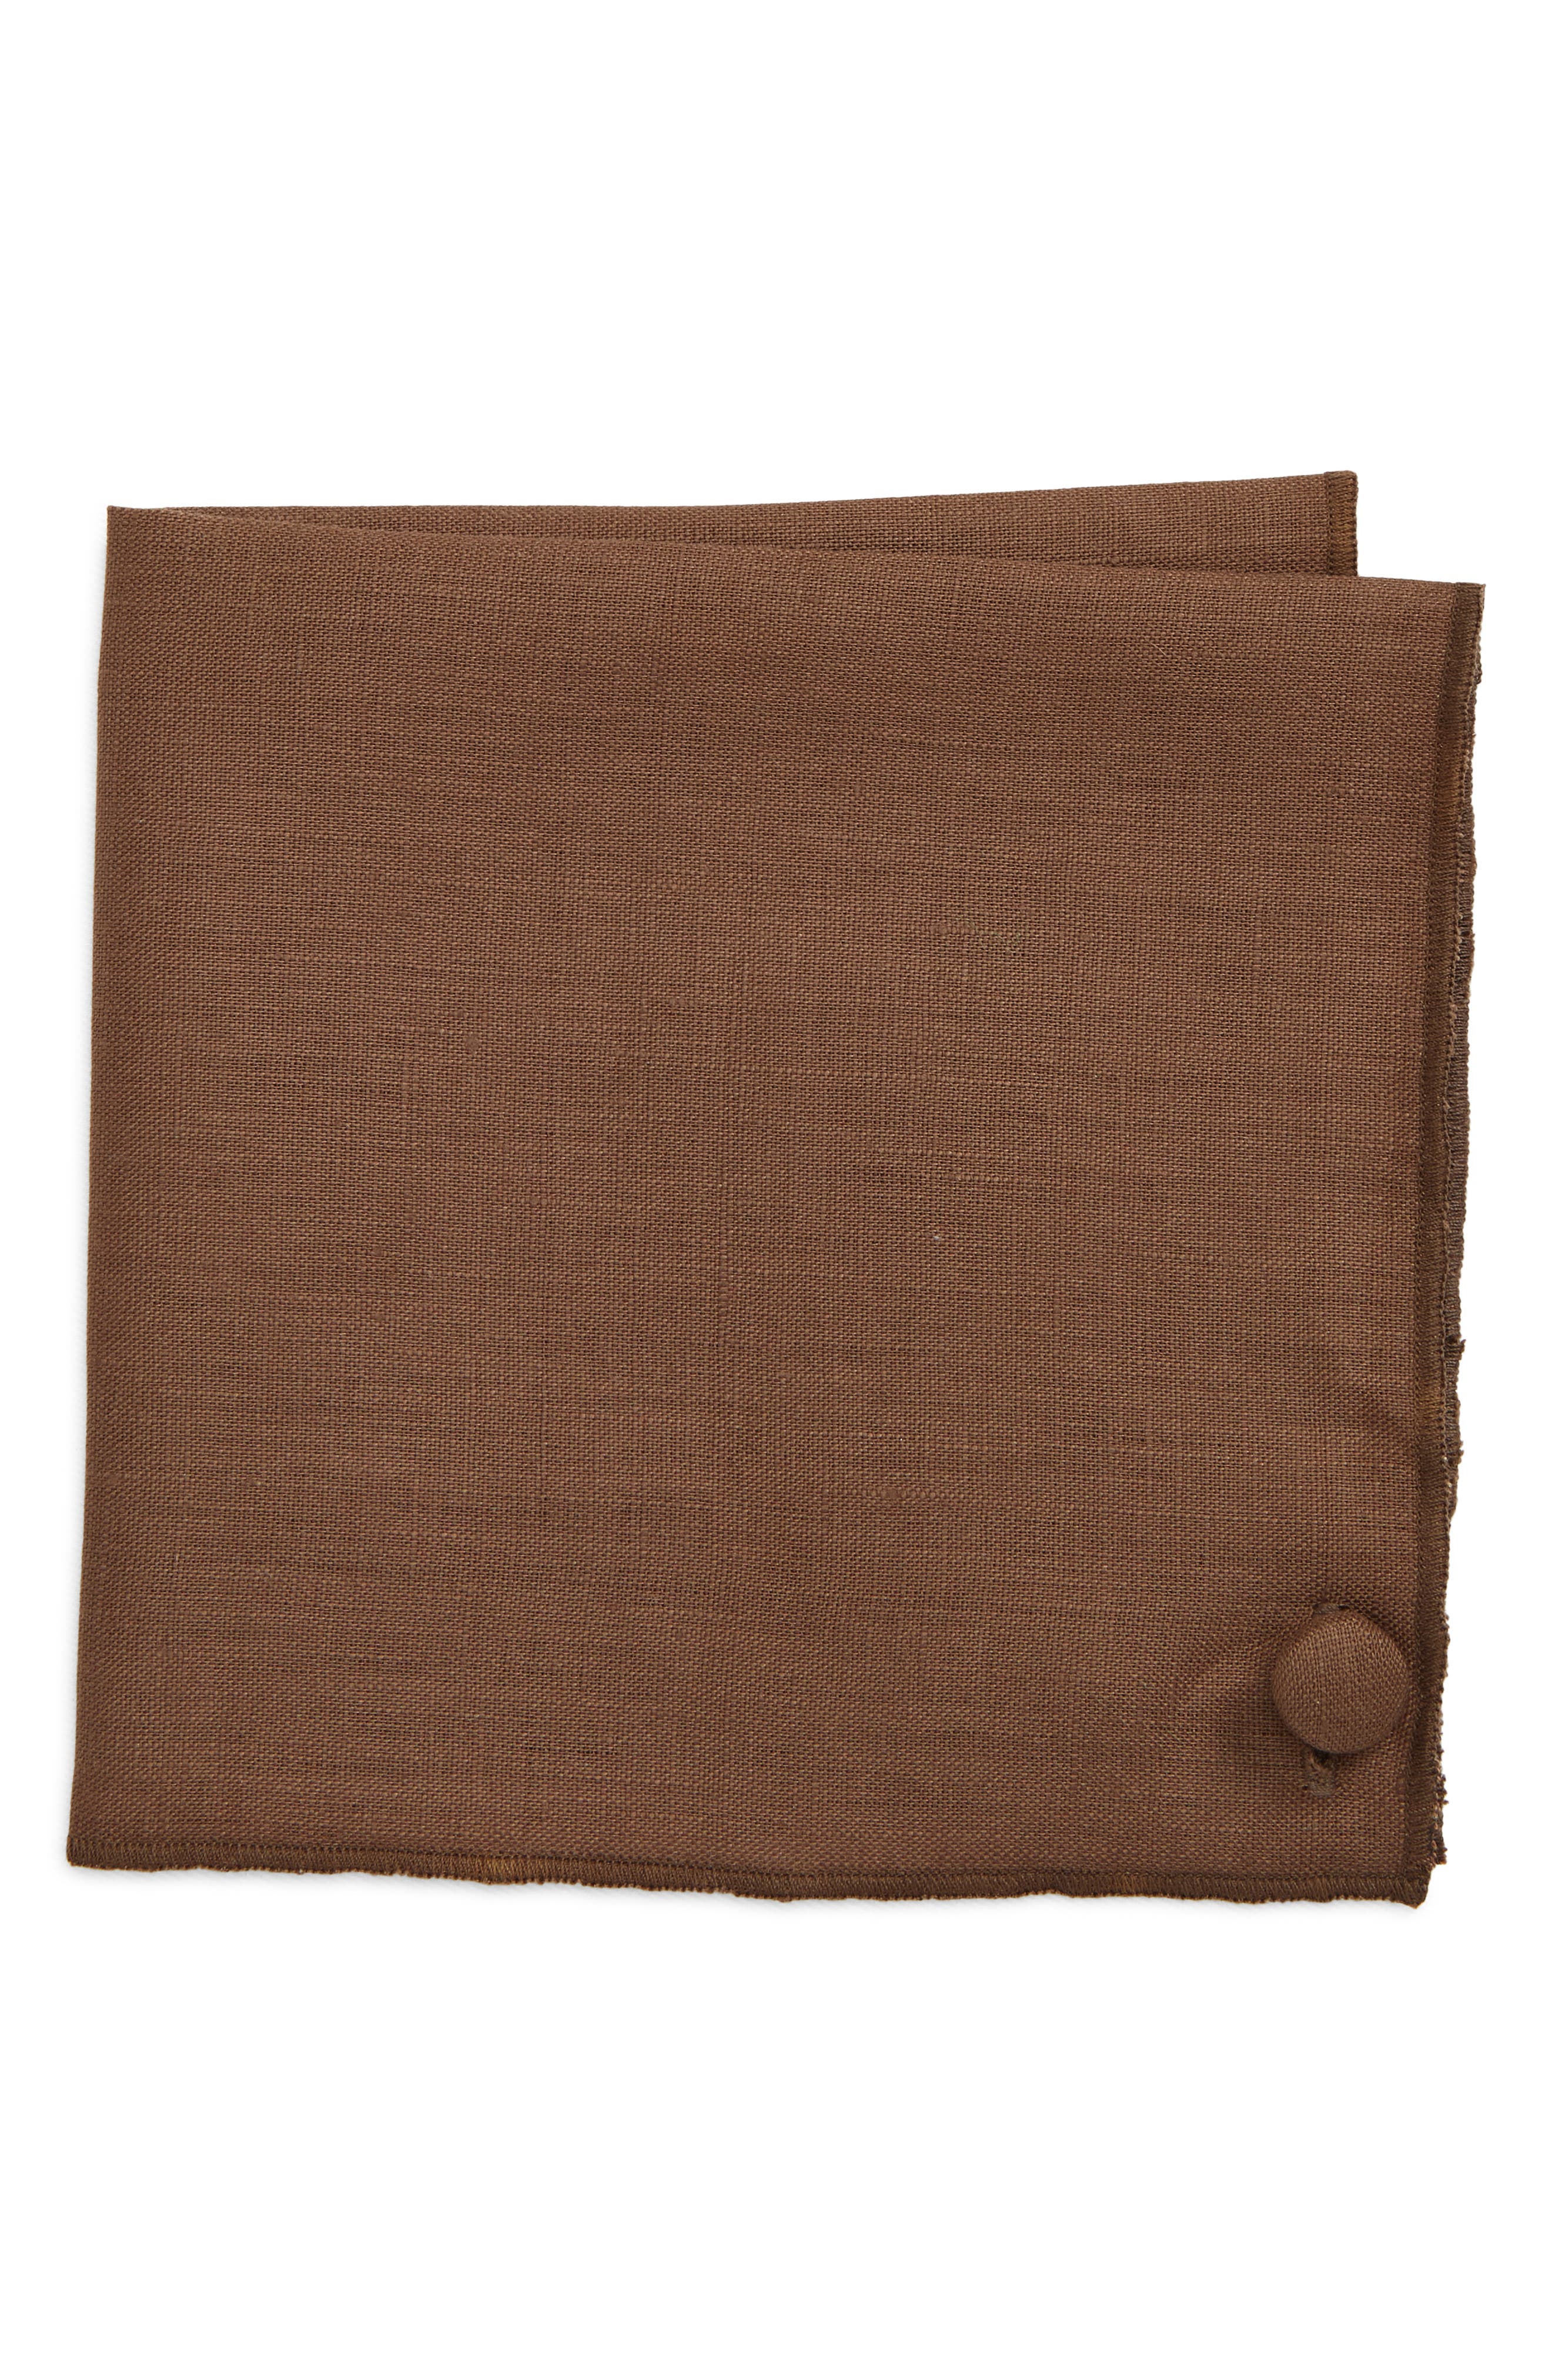 Brown Linen Pocket Square CLIFTON WILSON